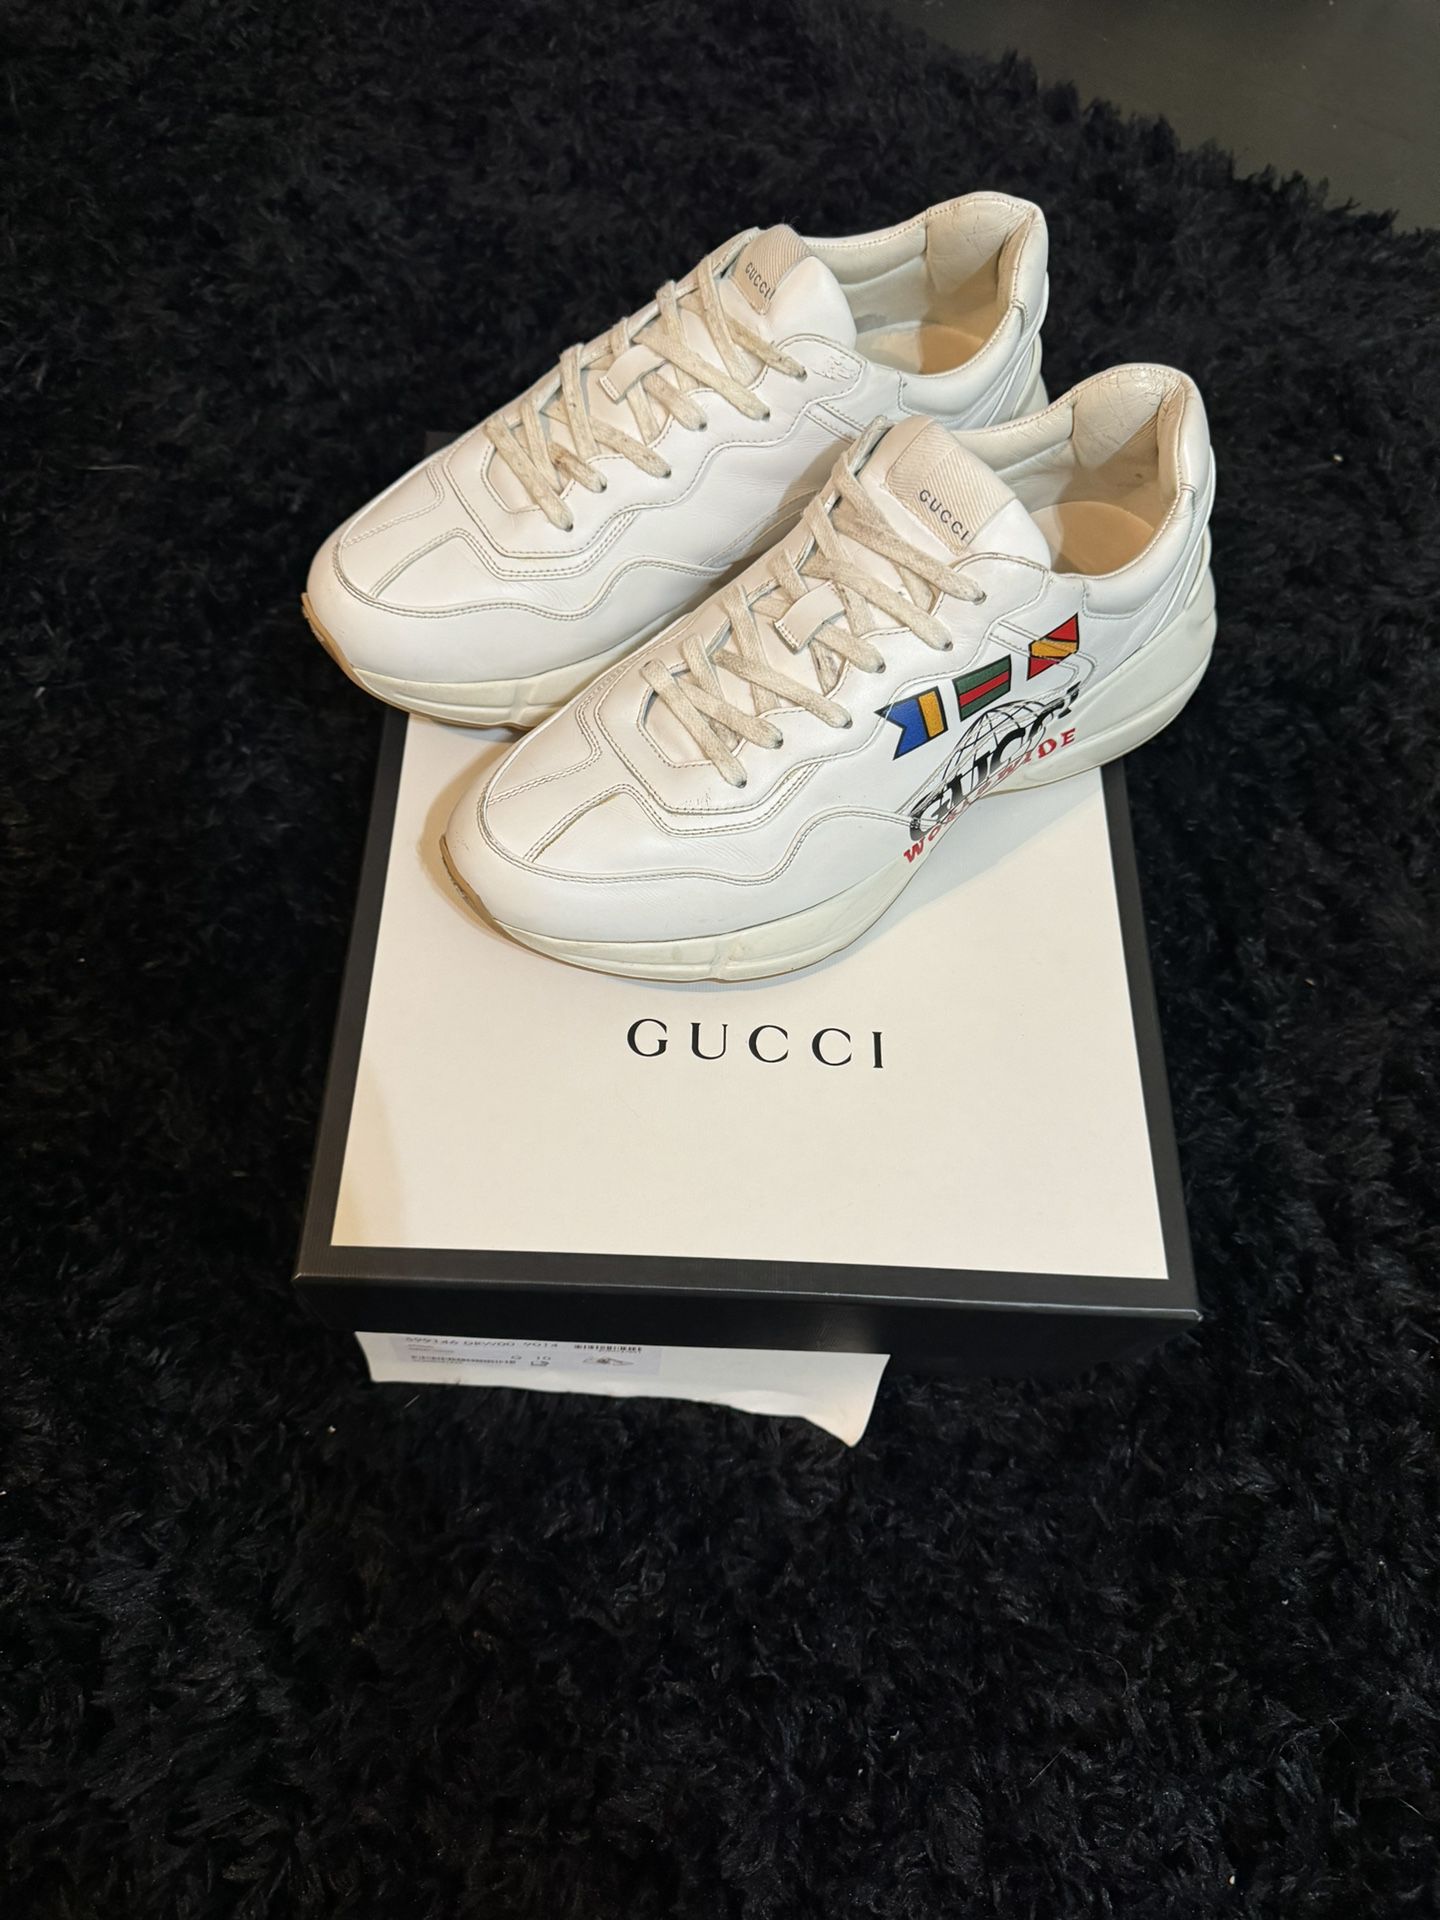 Gucci Rhython Worldwide Flags Sneaker Size 11